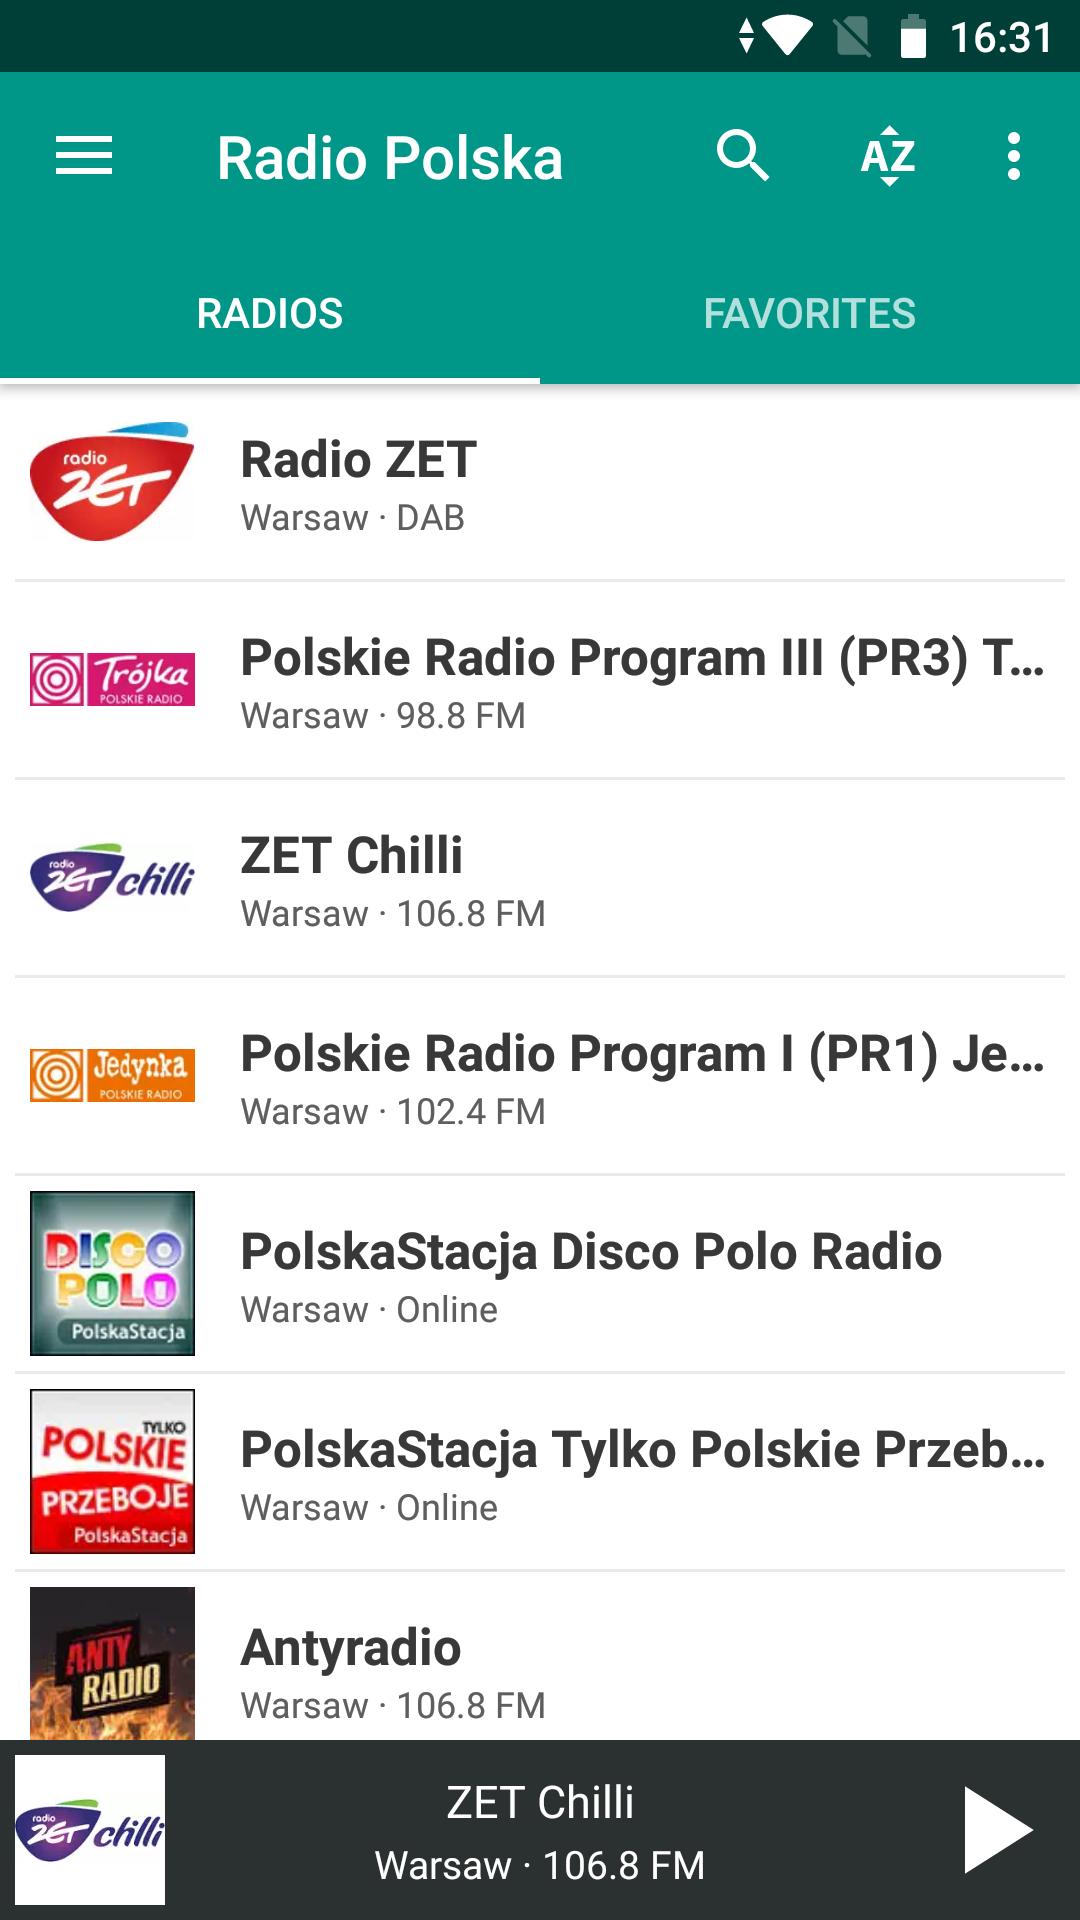 Radio Polska for Android - APK Download